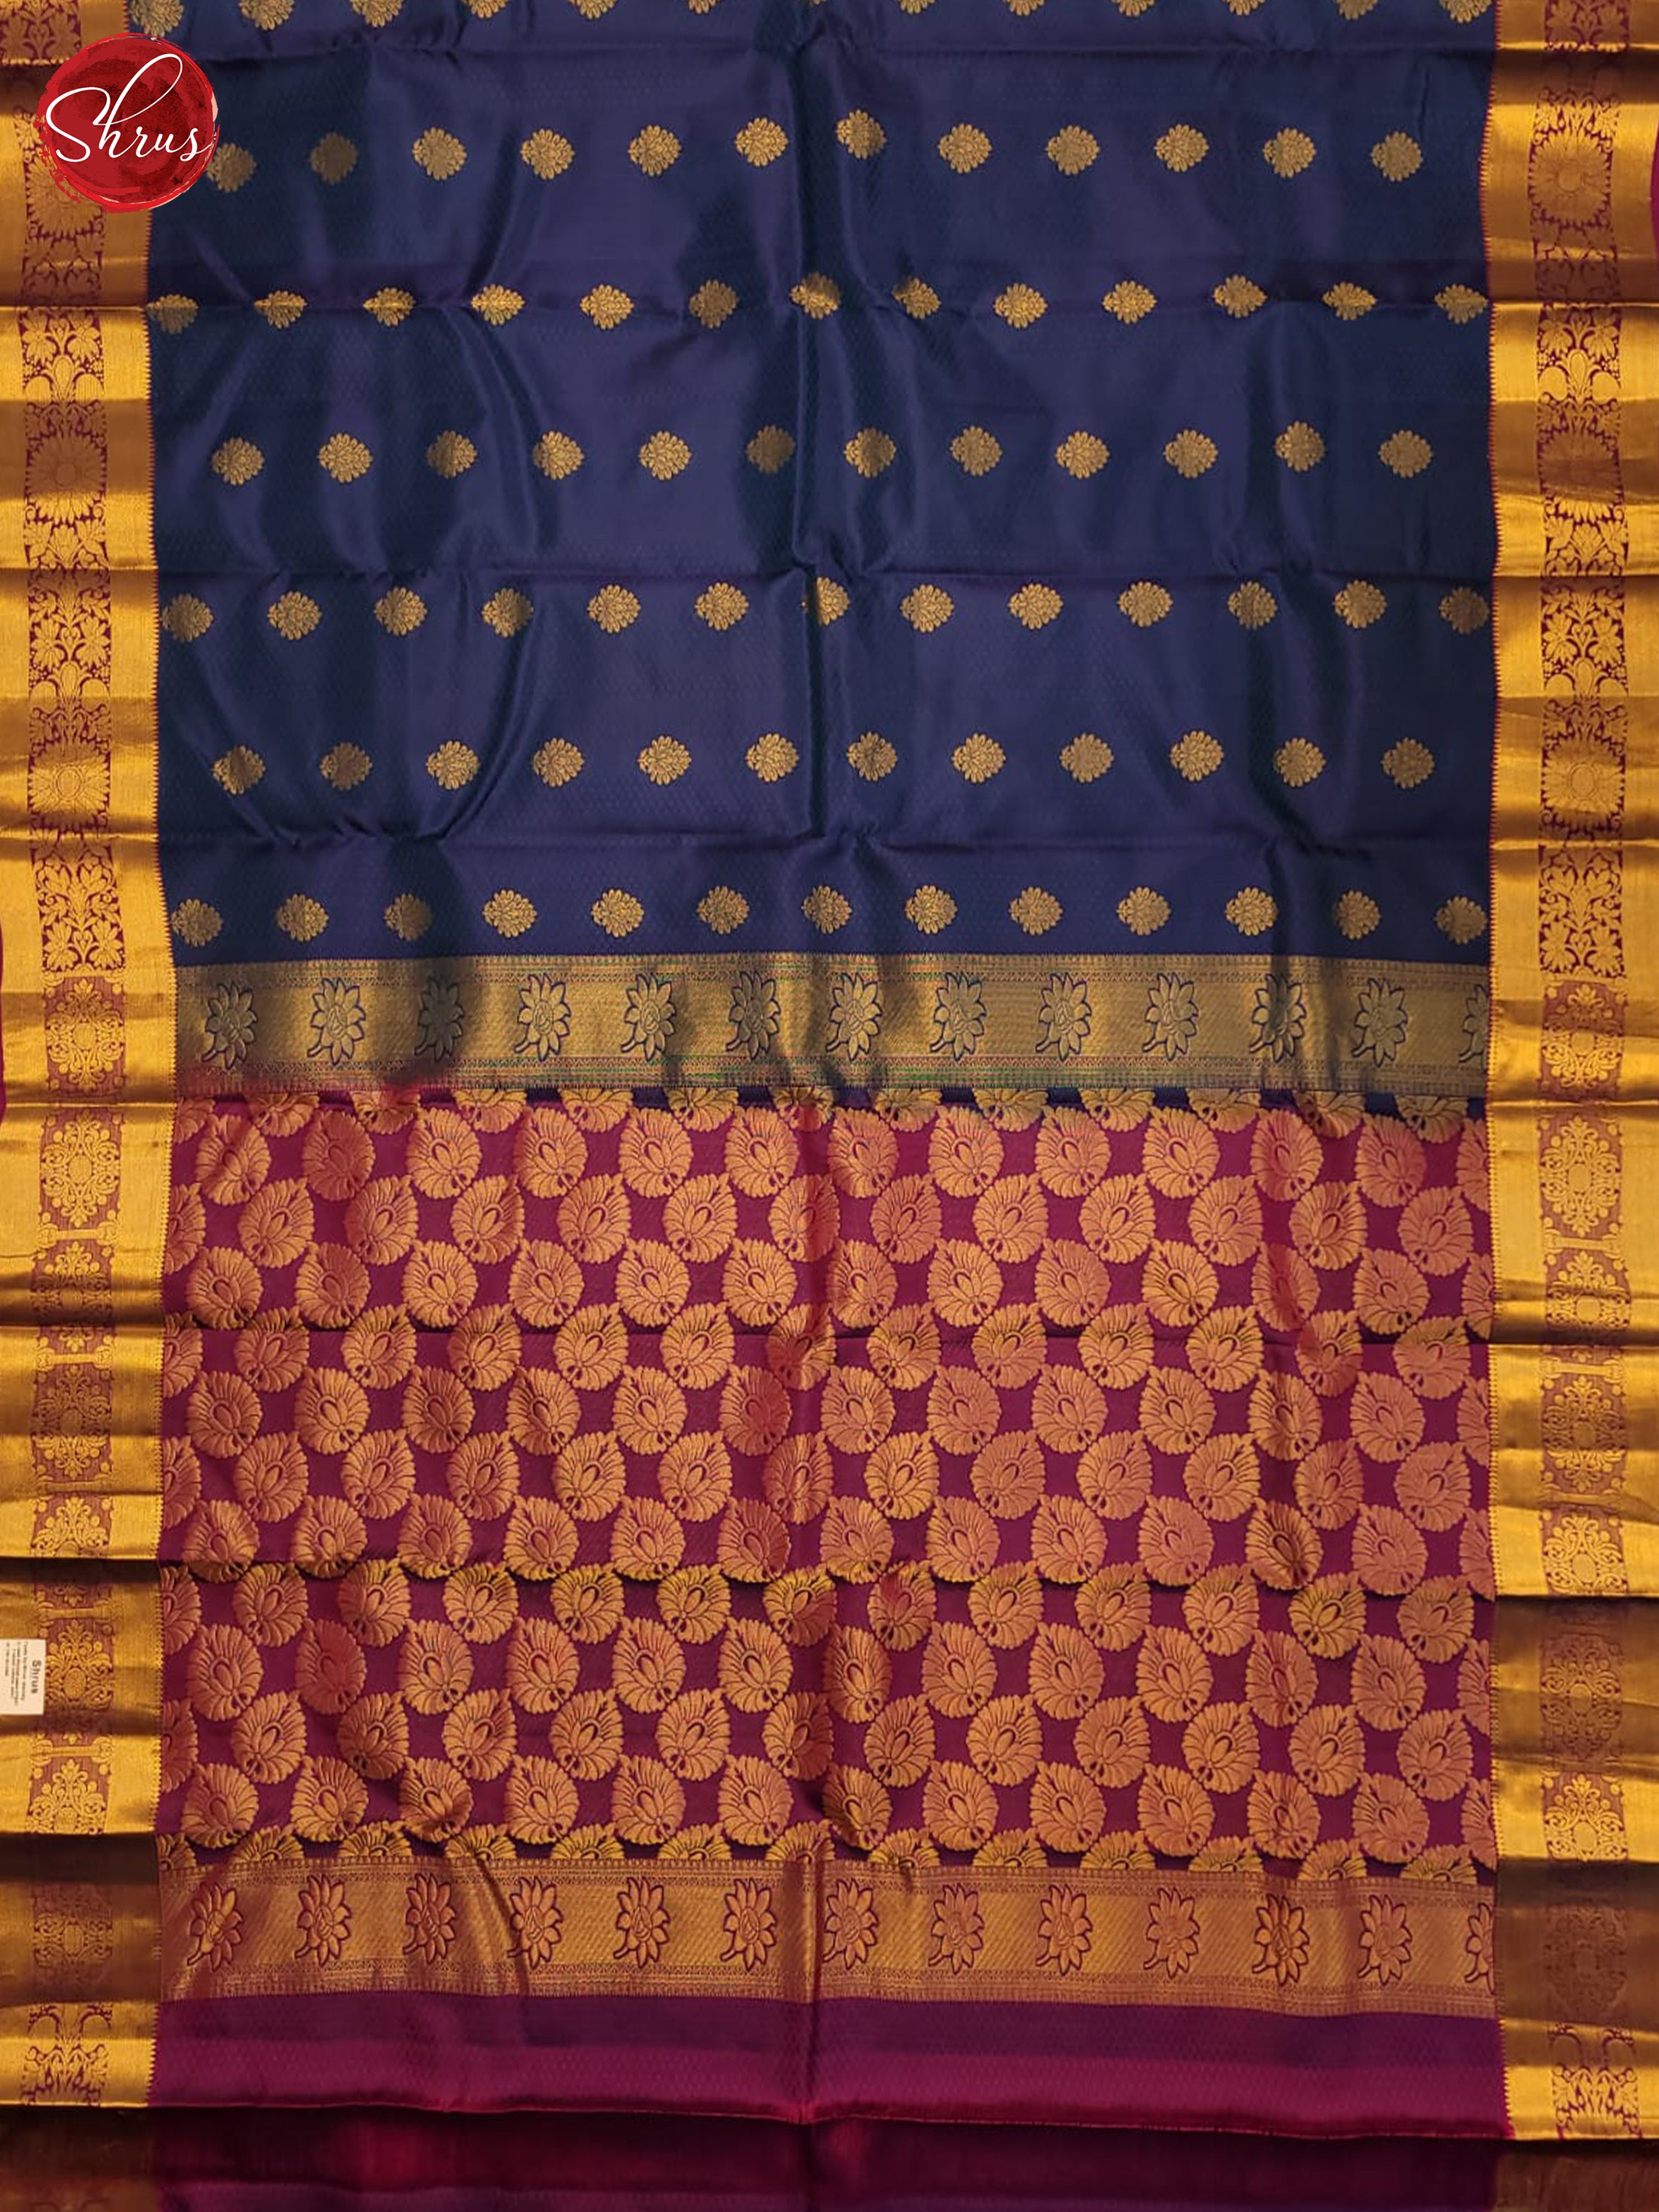 German Blue and vadamalli- Kanchipuram half-pure Silk Saree - Shop on ShrusEternity.com